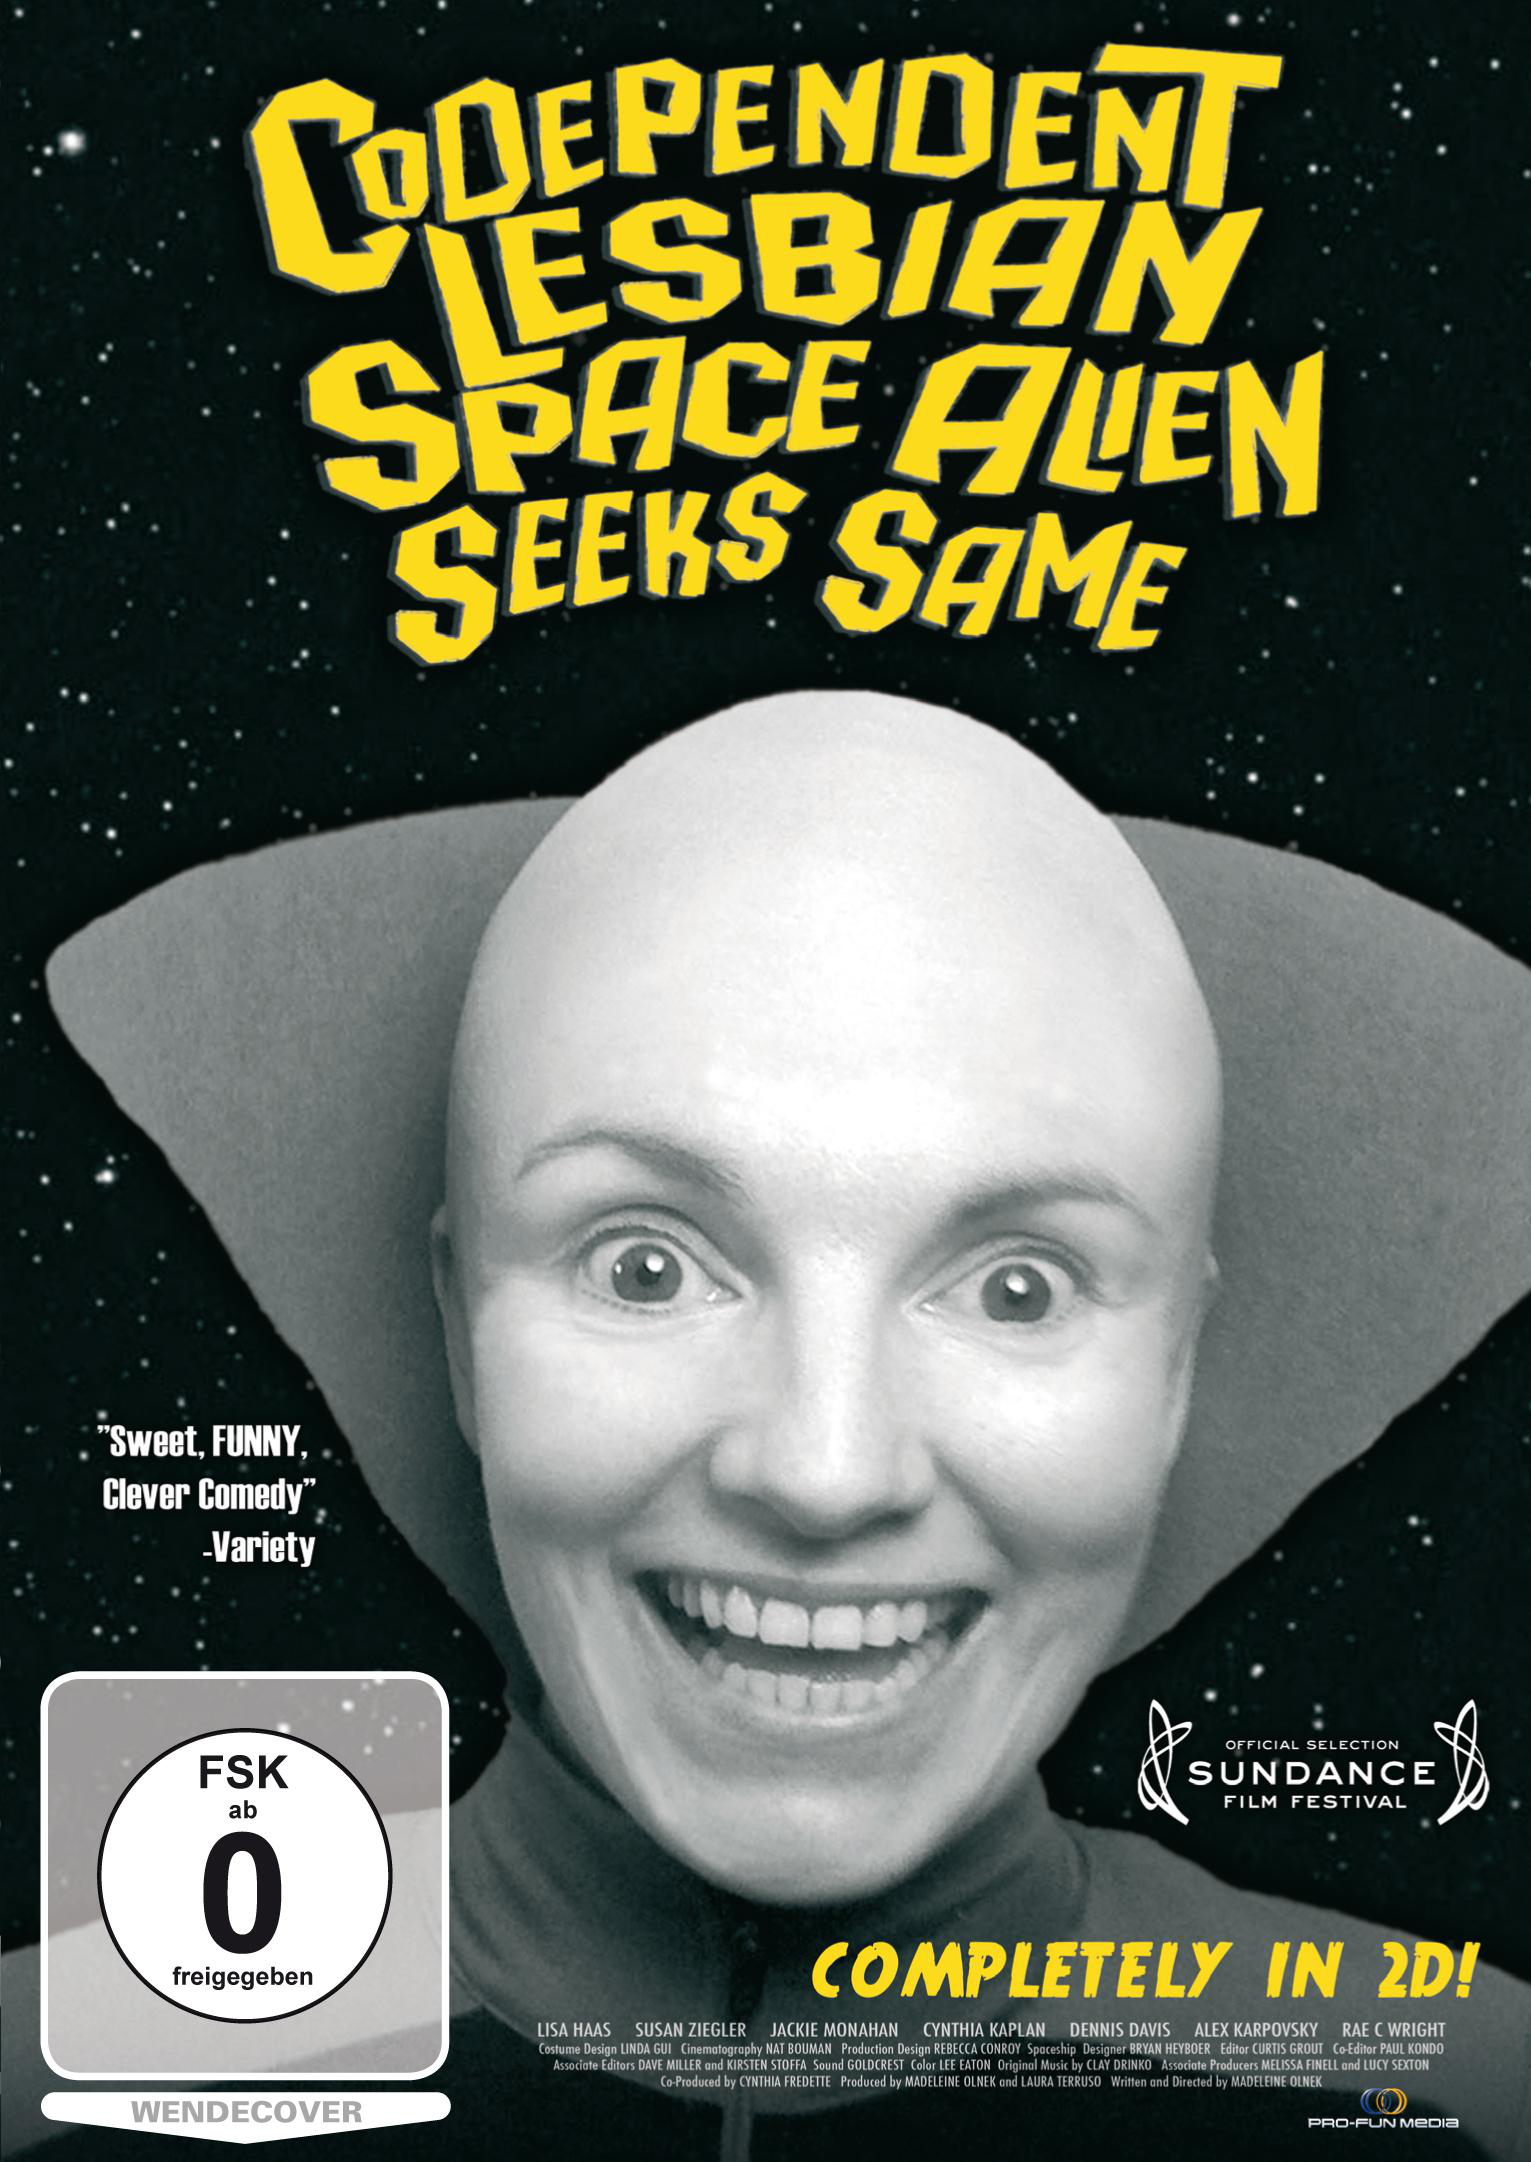 Same DVD Codependent Lesbian Seeks Space Alien